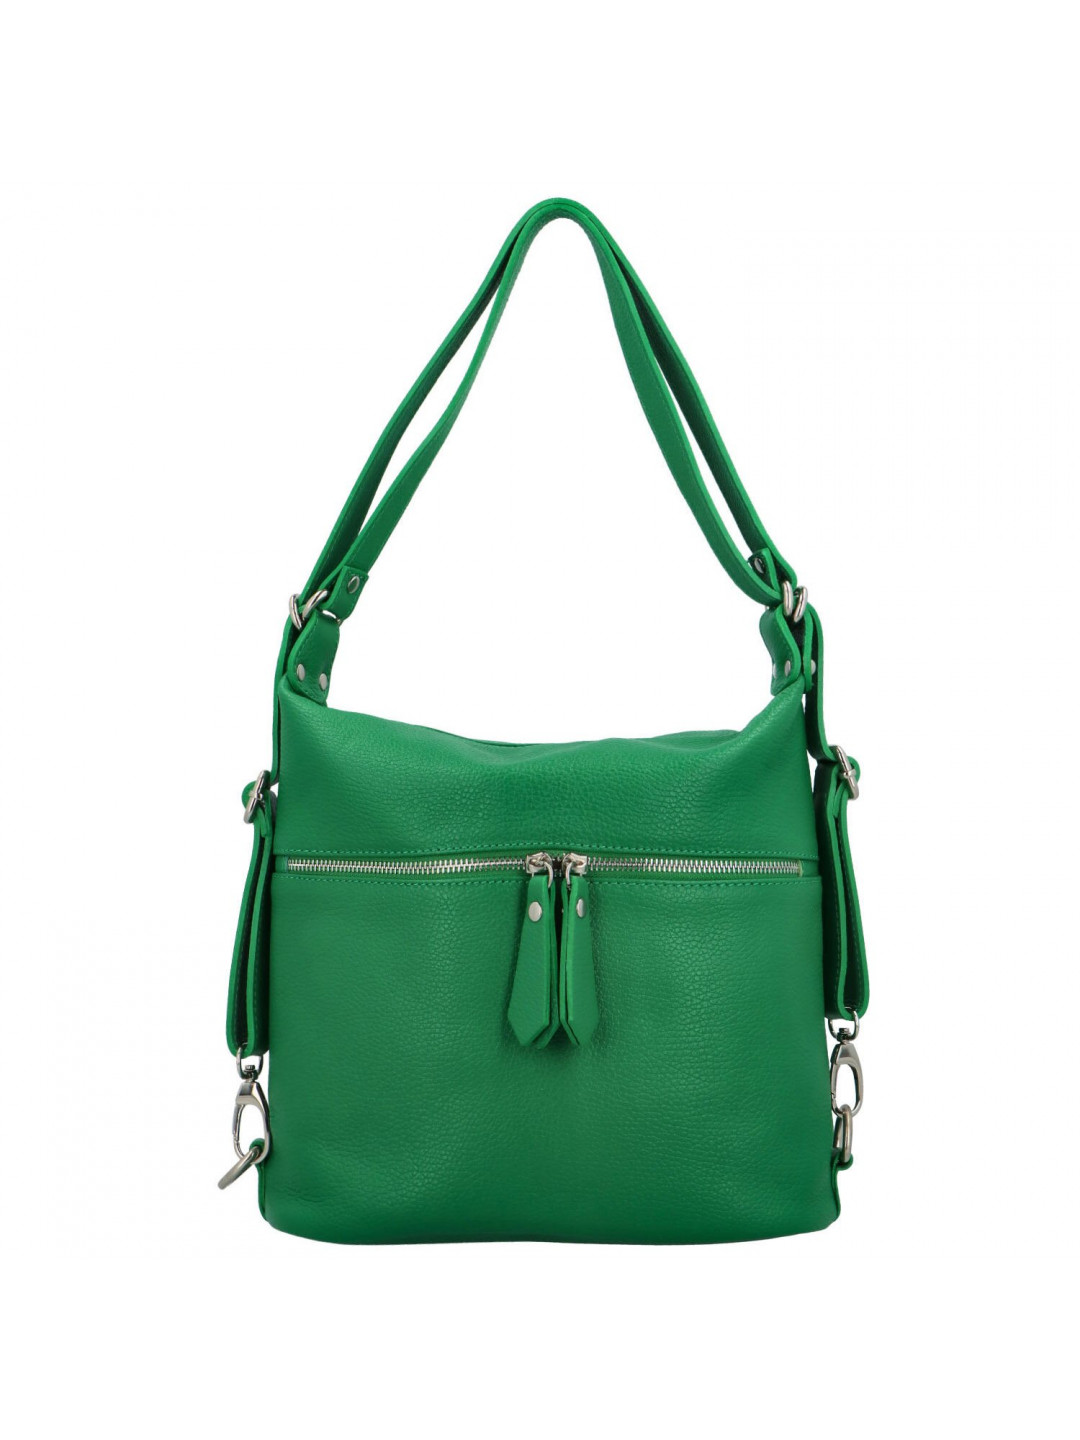 Dámský kožený kabelko batoh zelený – Delami Teresa